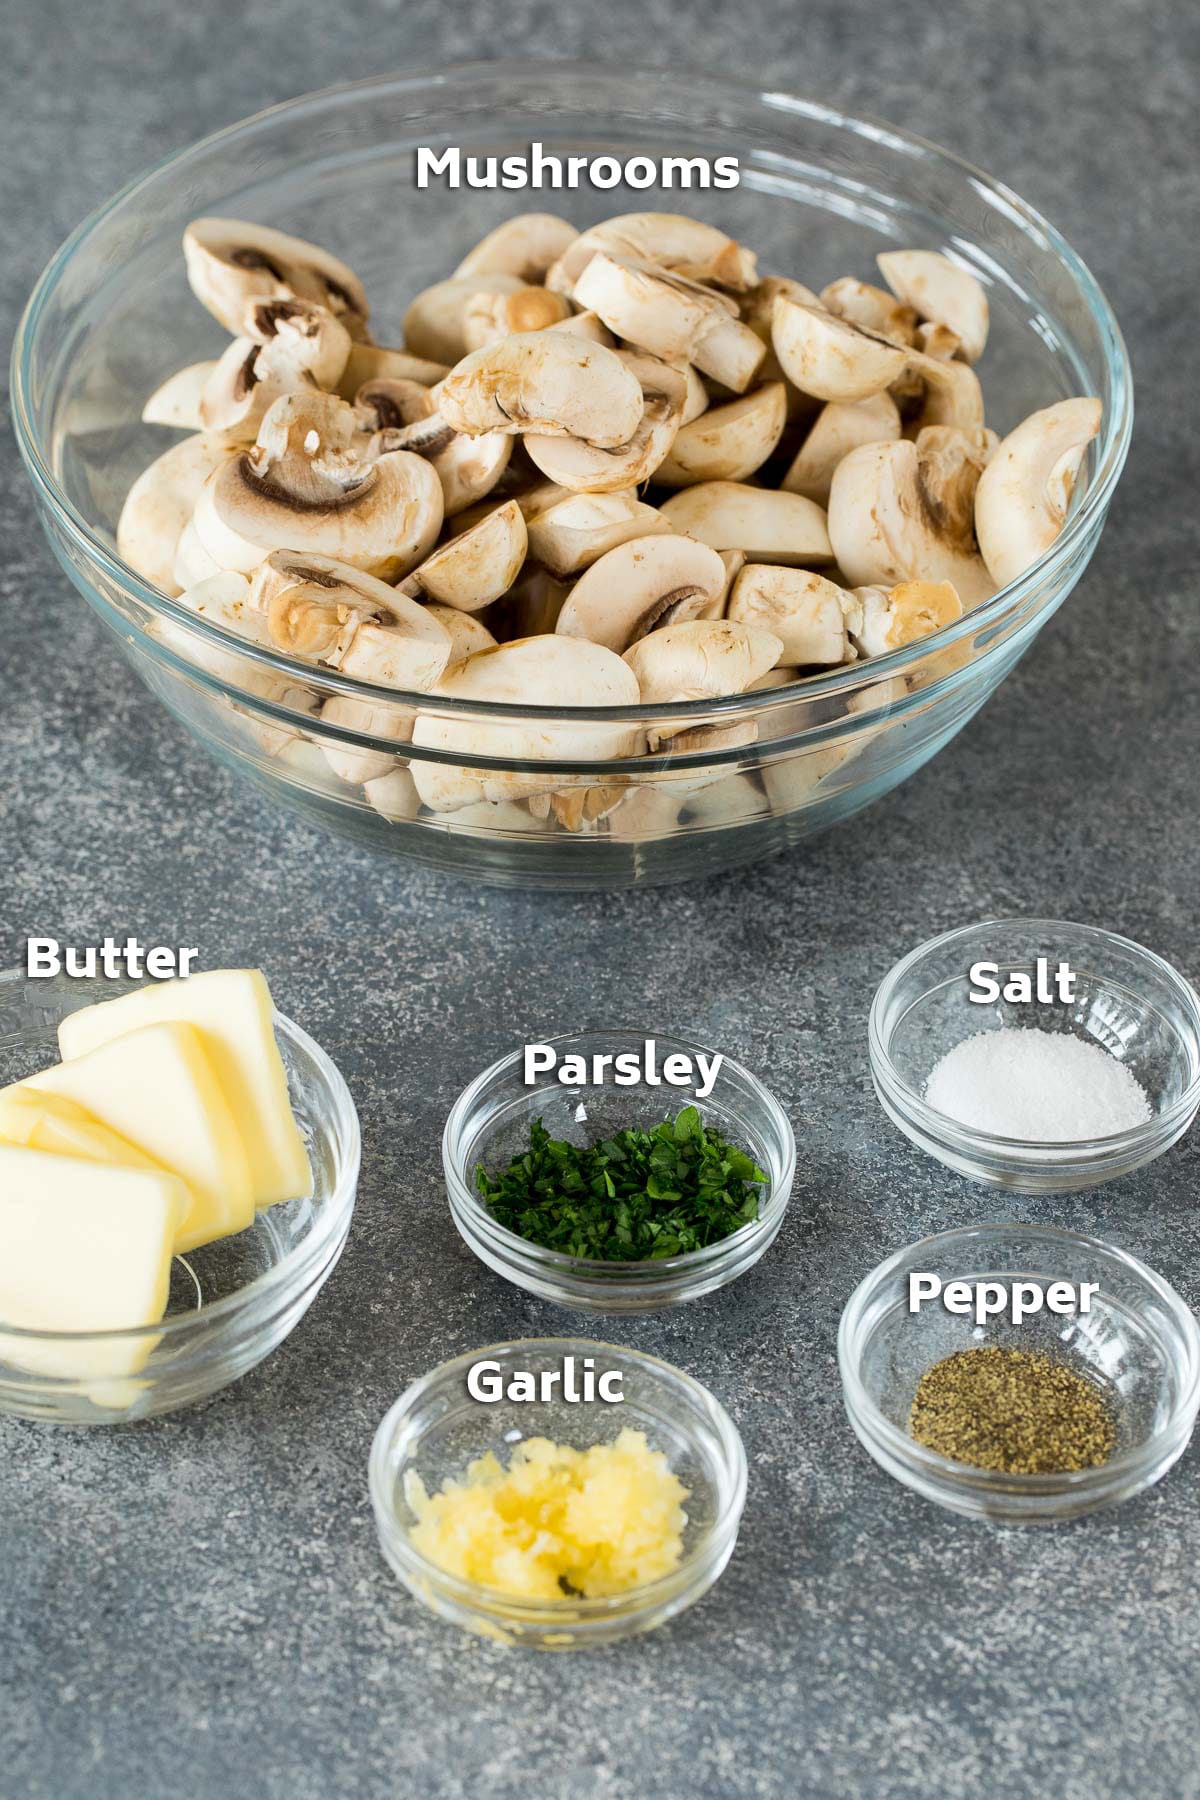 Bowls of ingredients including mushrooms, butter, garlic and seasonings.